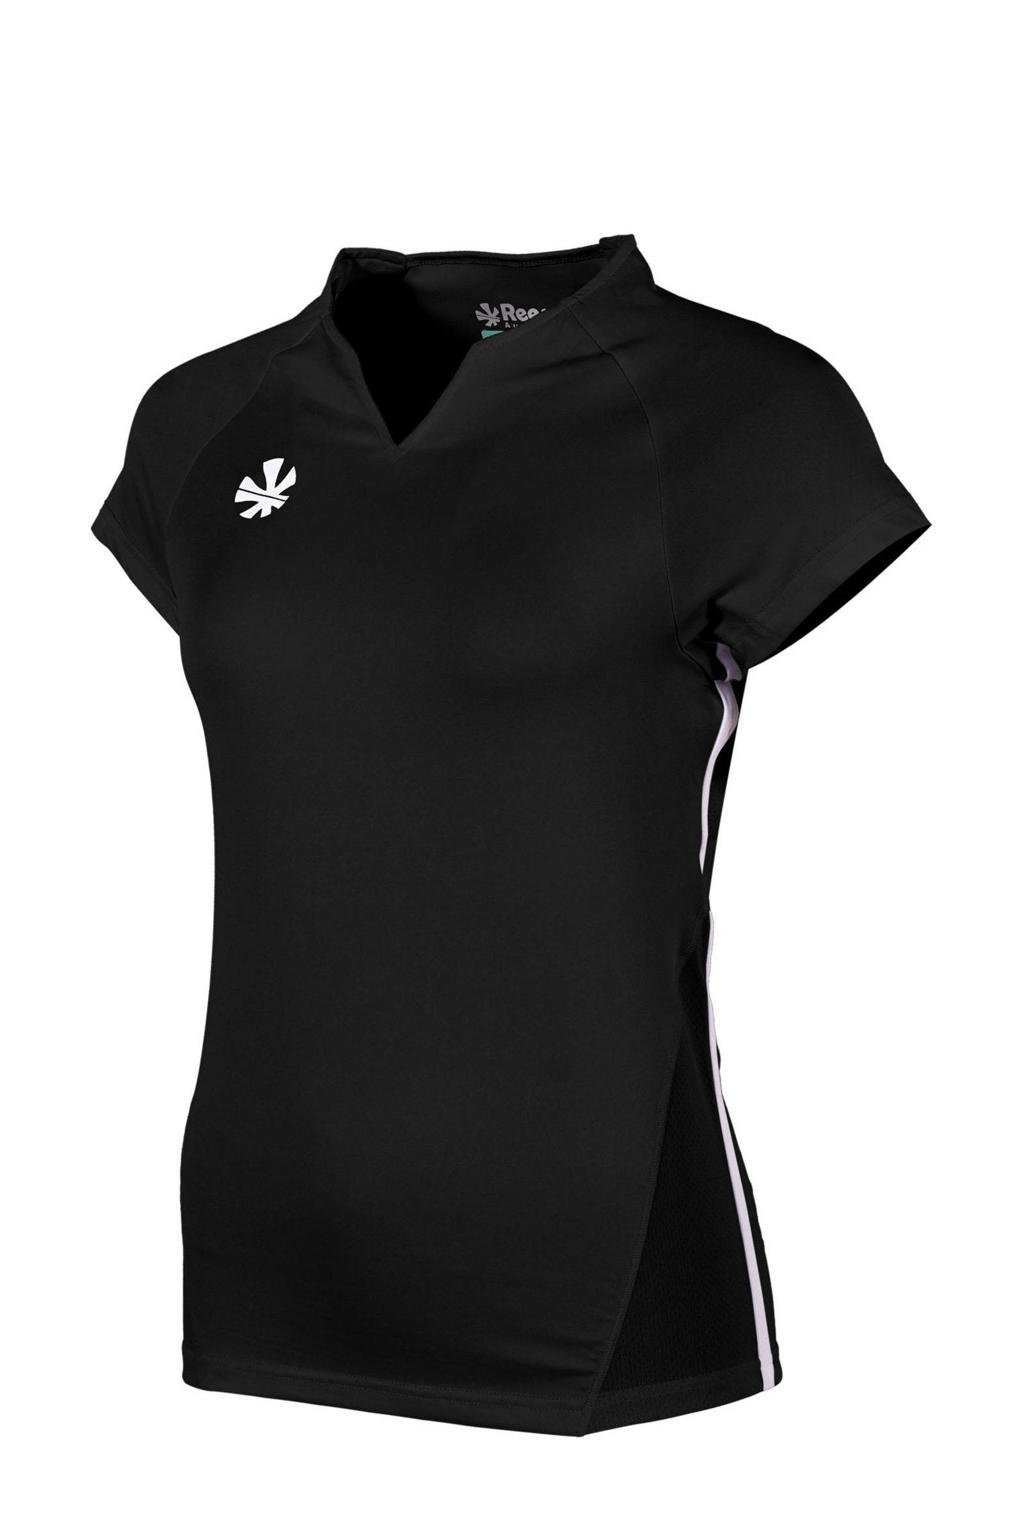 Zwarte meisjes Reece Australia sport T-shirt Rise van gerecycled polyester met logo dessin, korte mouwen en V-hals